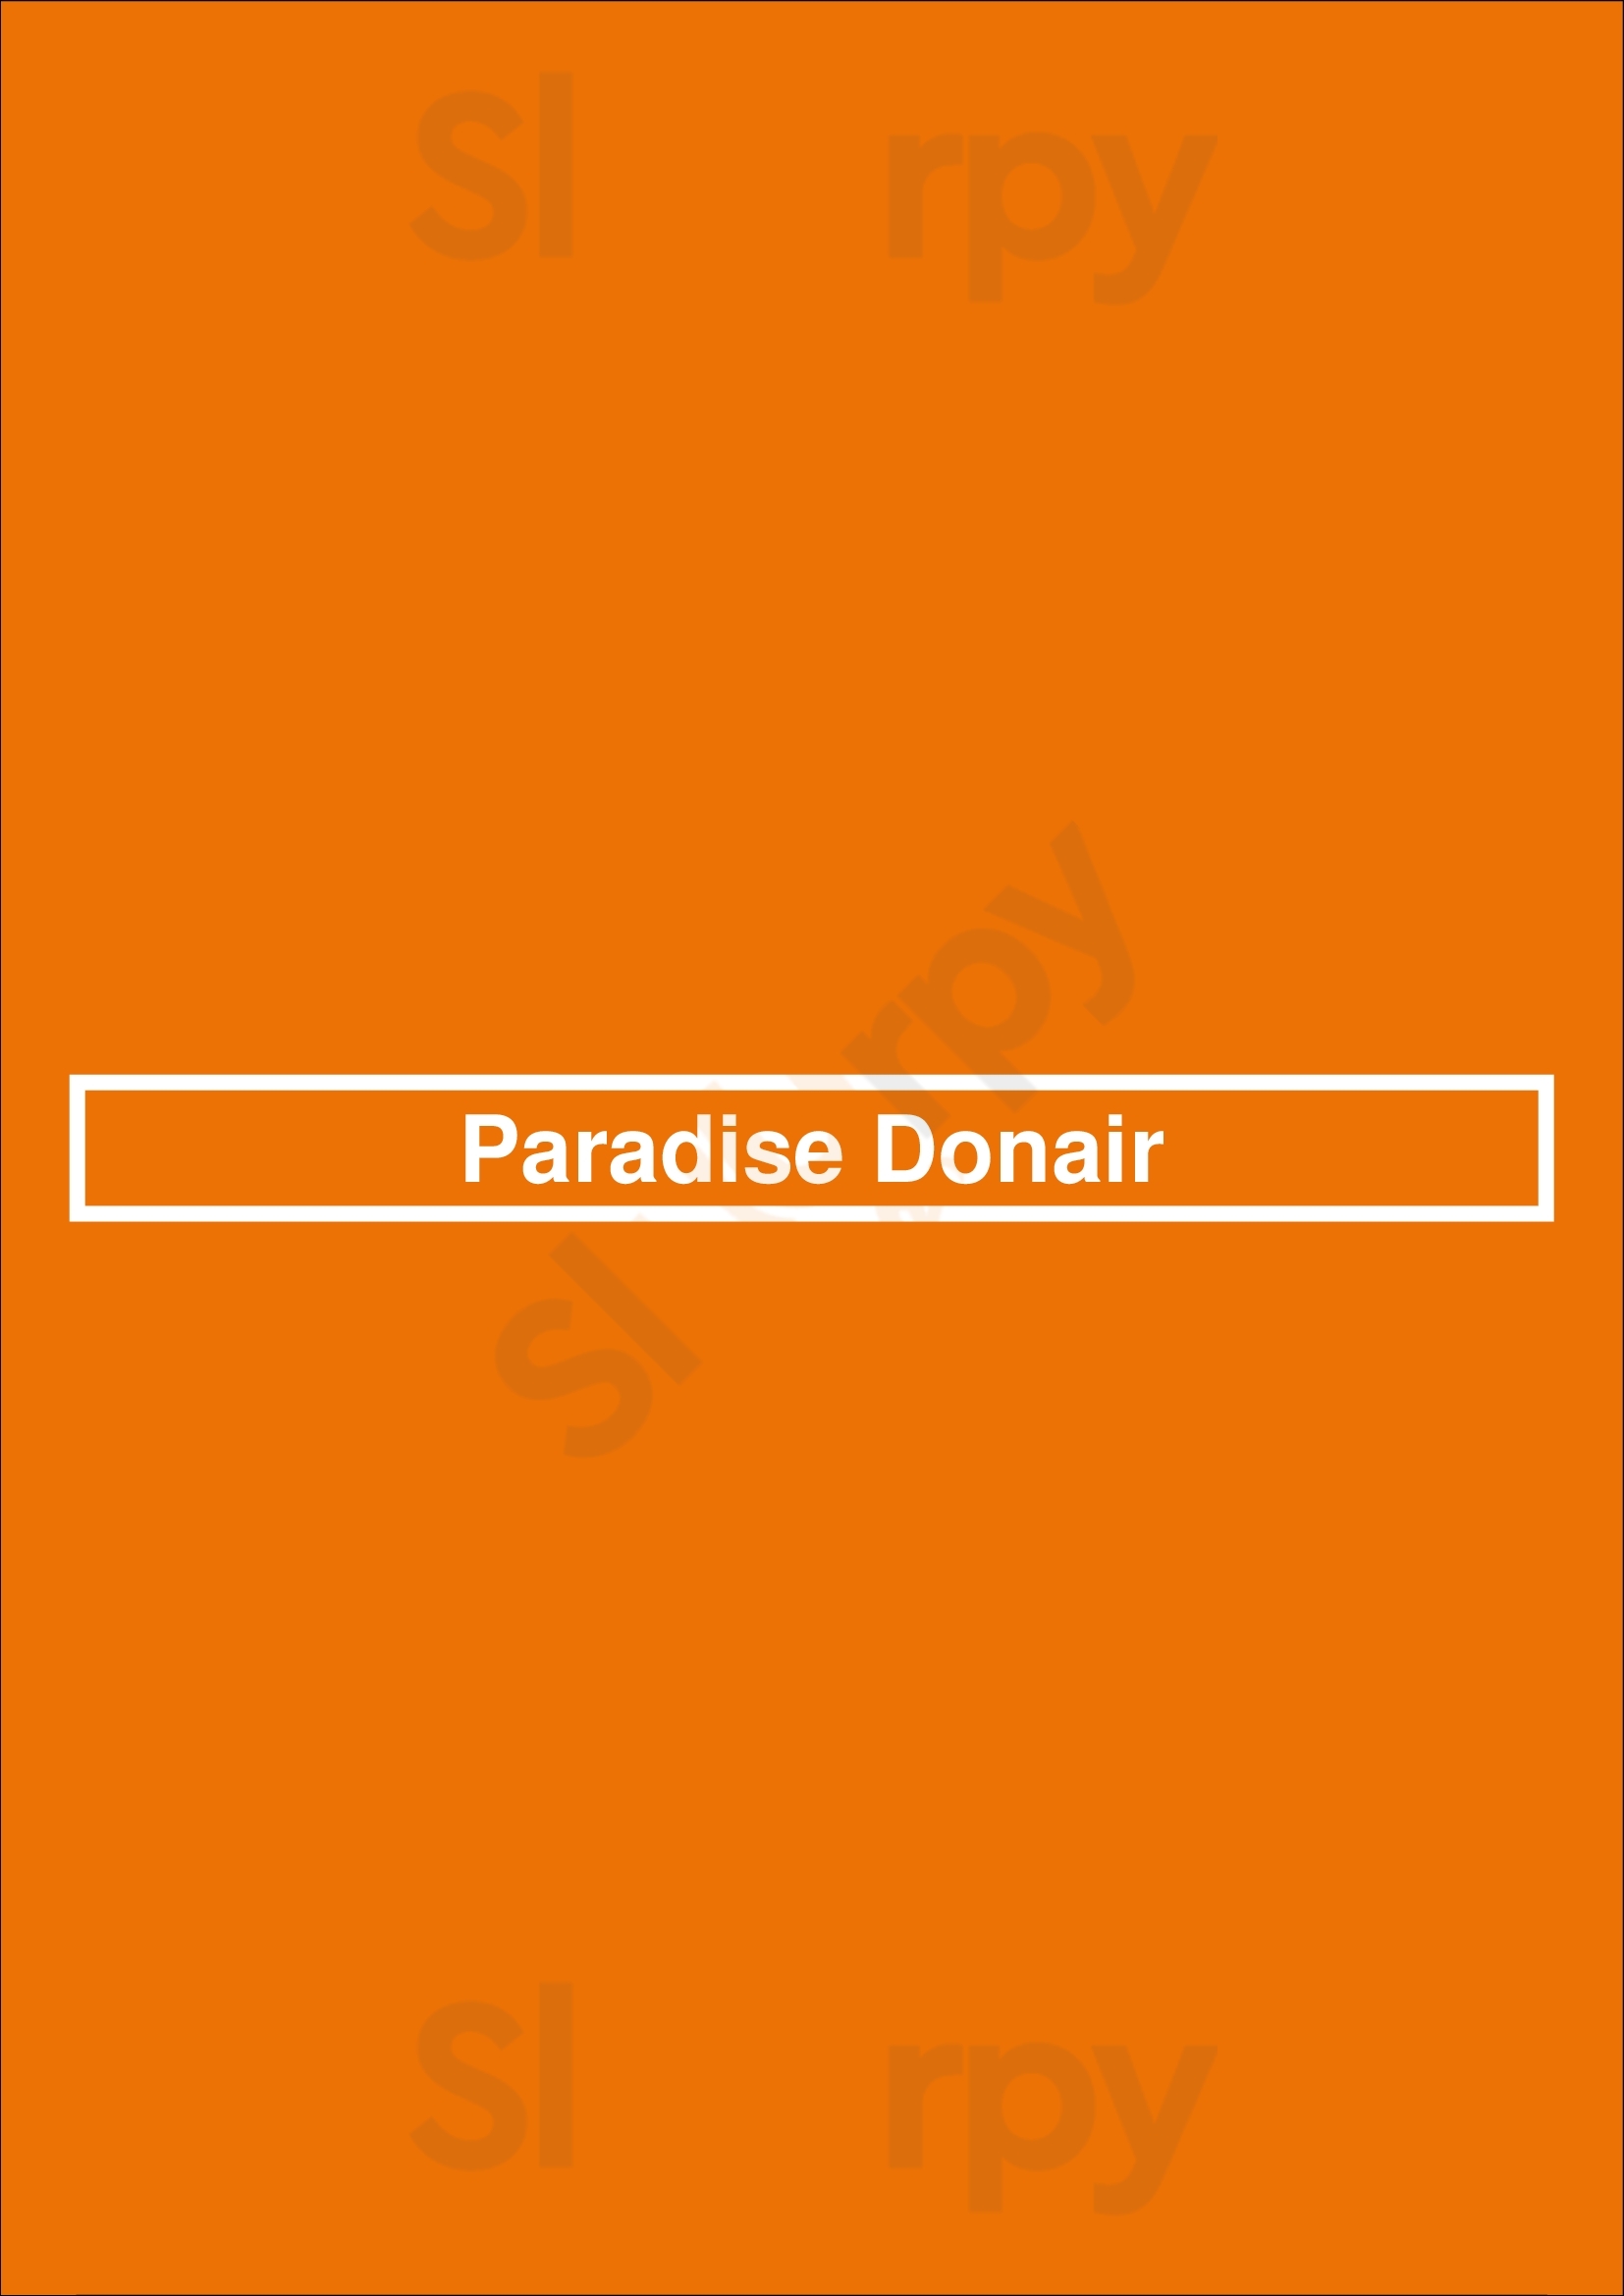 Paradise Donair New Westminster Menu - 1